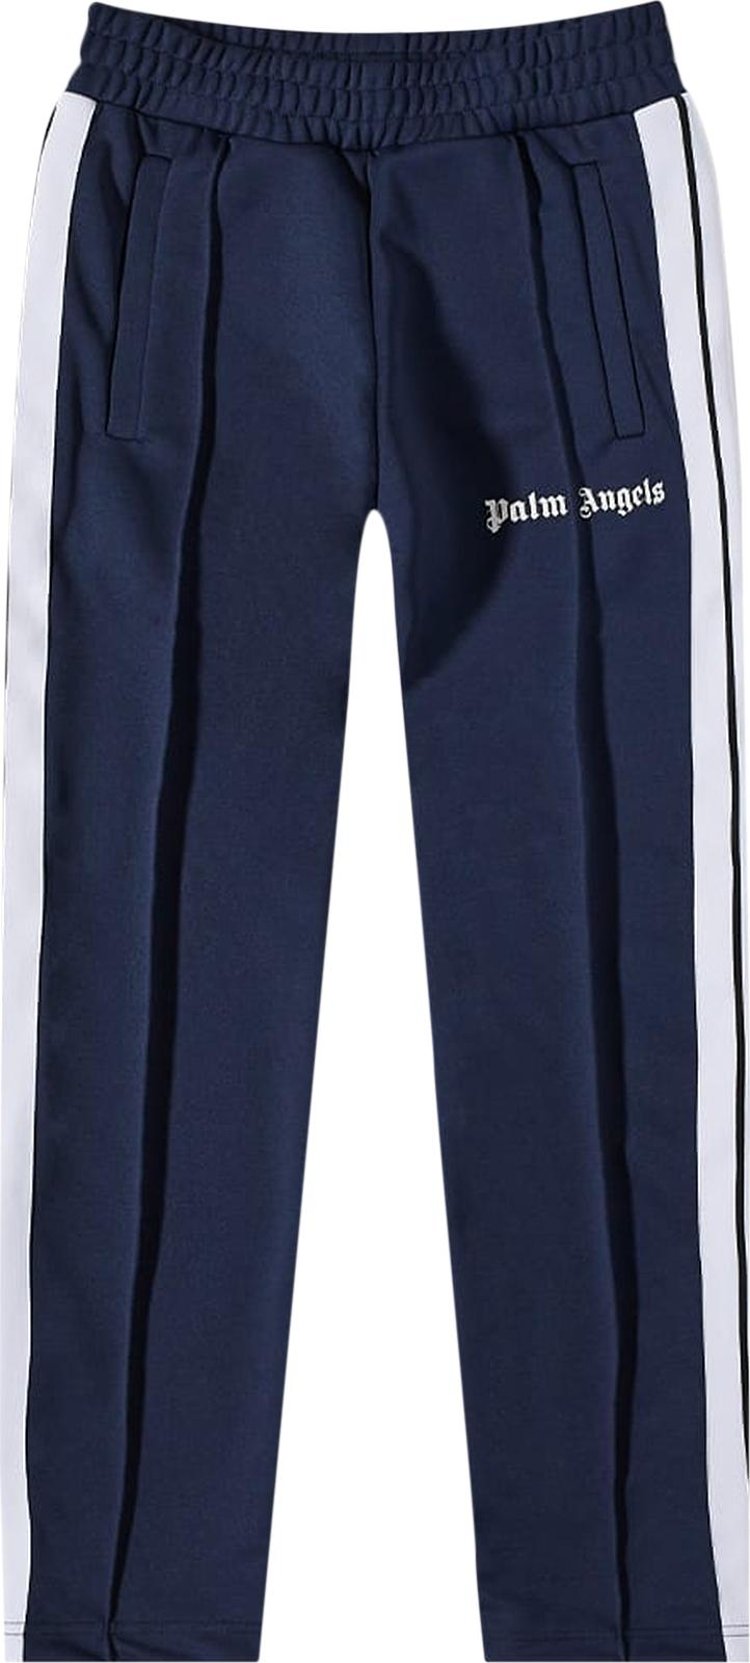 Брюки Palm Angels Slim Track Pants 'Navy Blue/White', синий брюки palm angels pa jaquard track pants navy blue off white синий